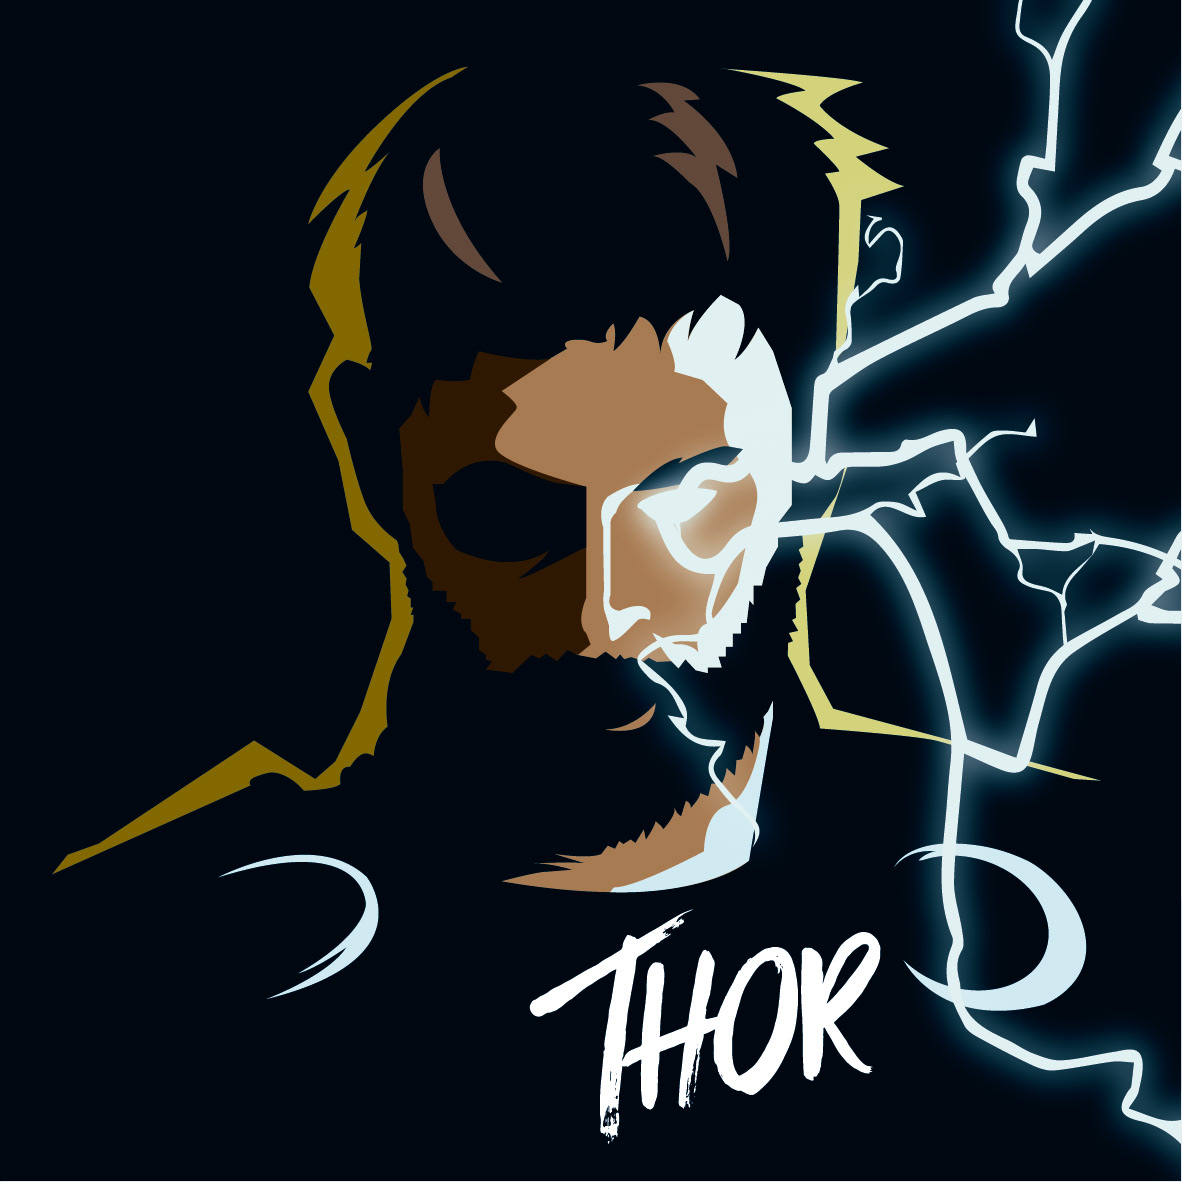 Avengers Vengadores ironman captainamerica captainmarvel marvel Hulk Thor Thanos infinitywar